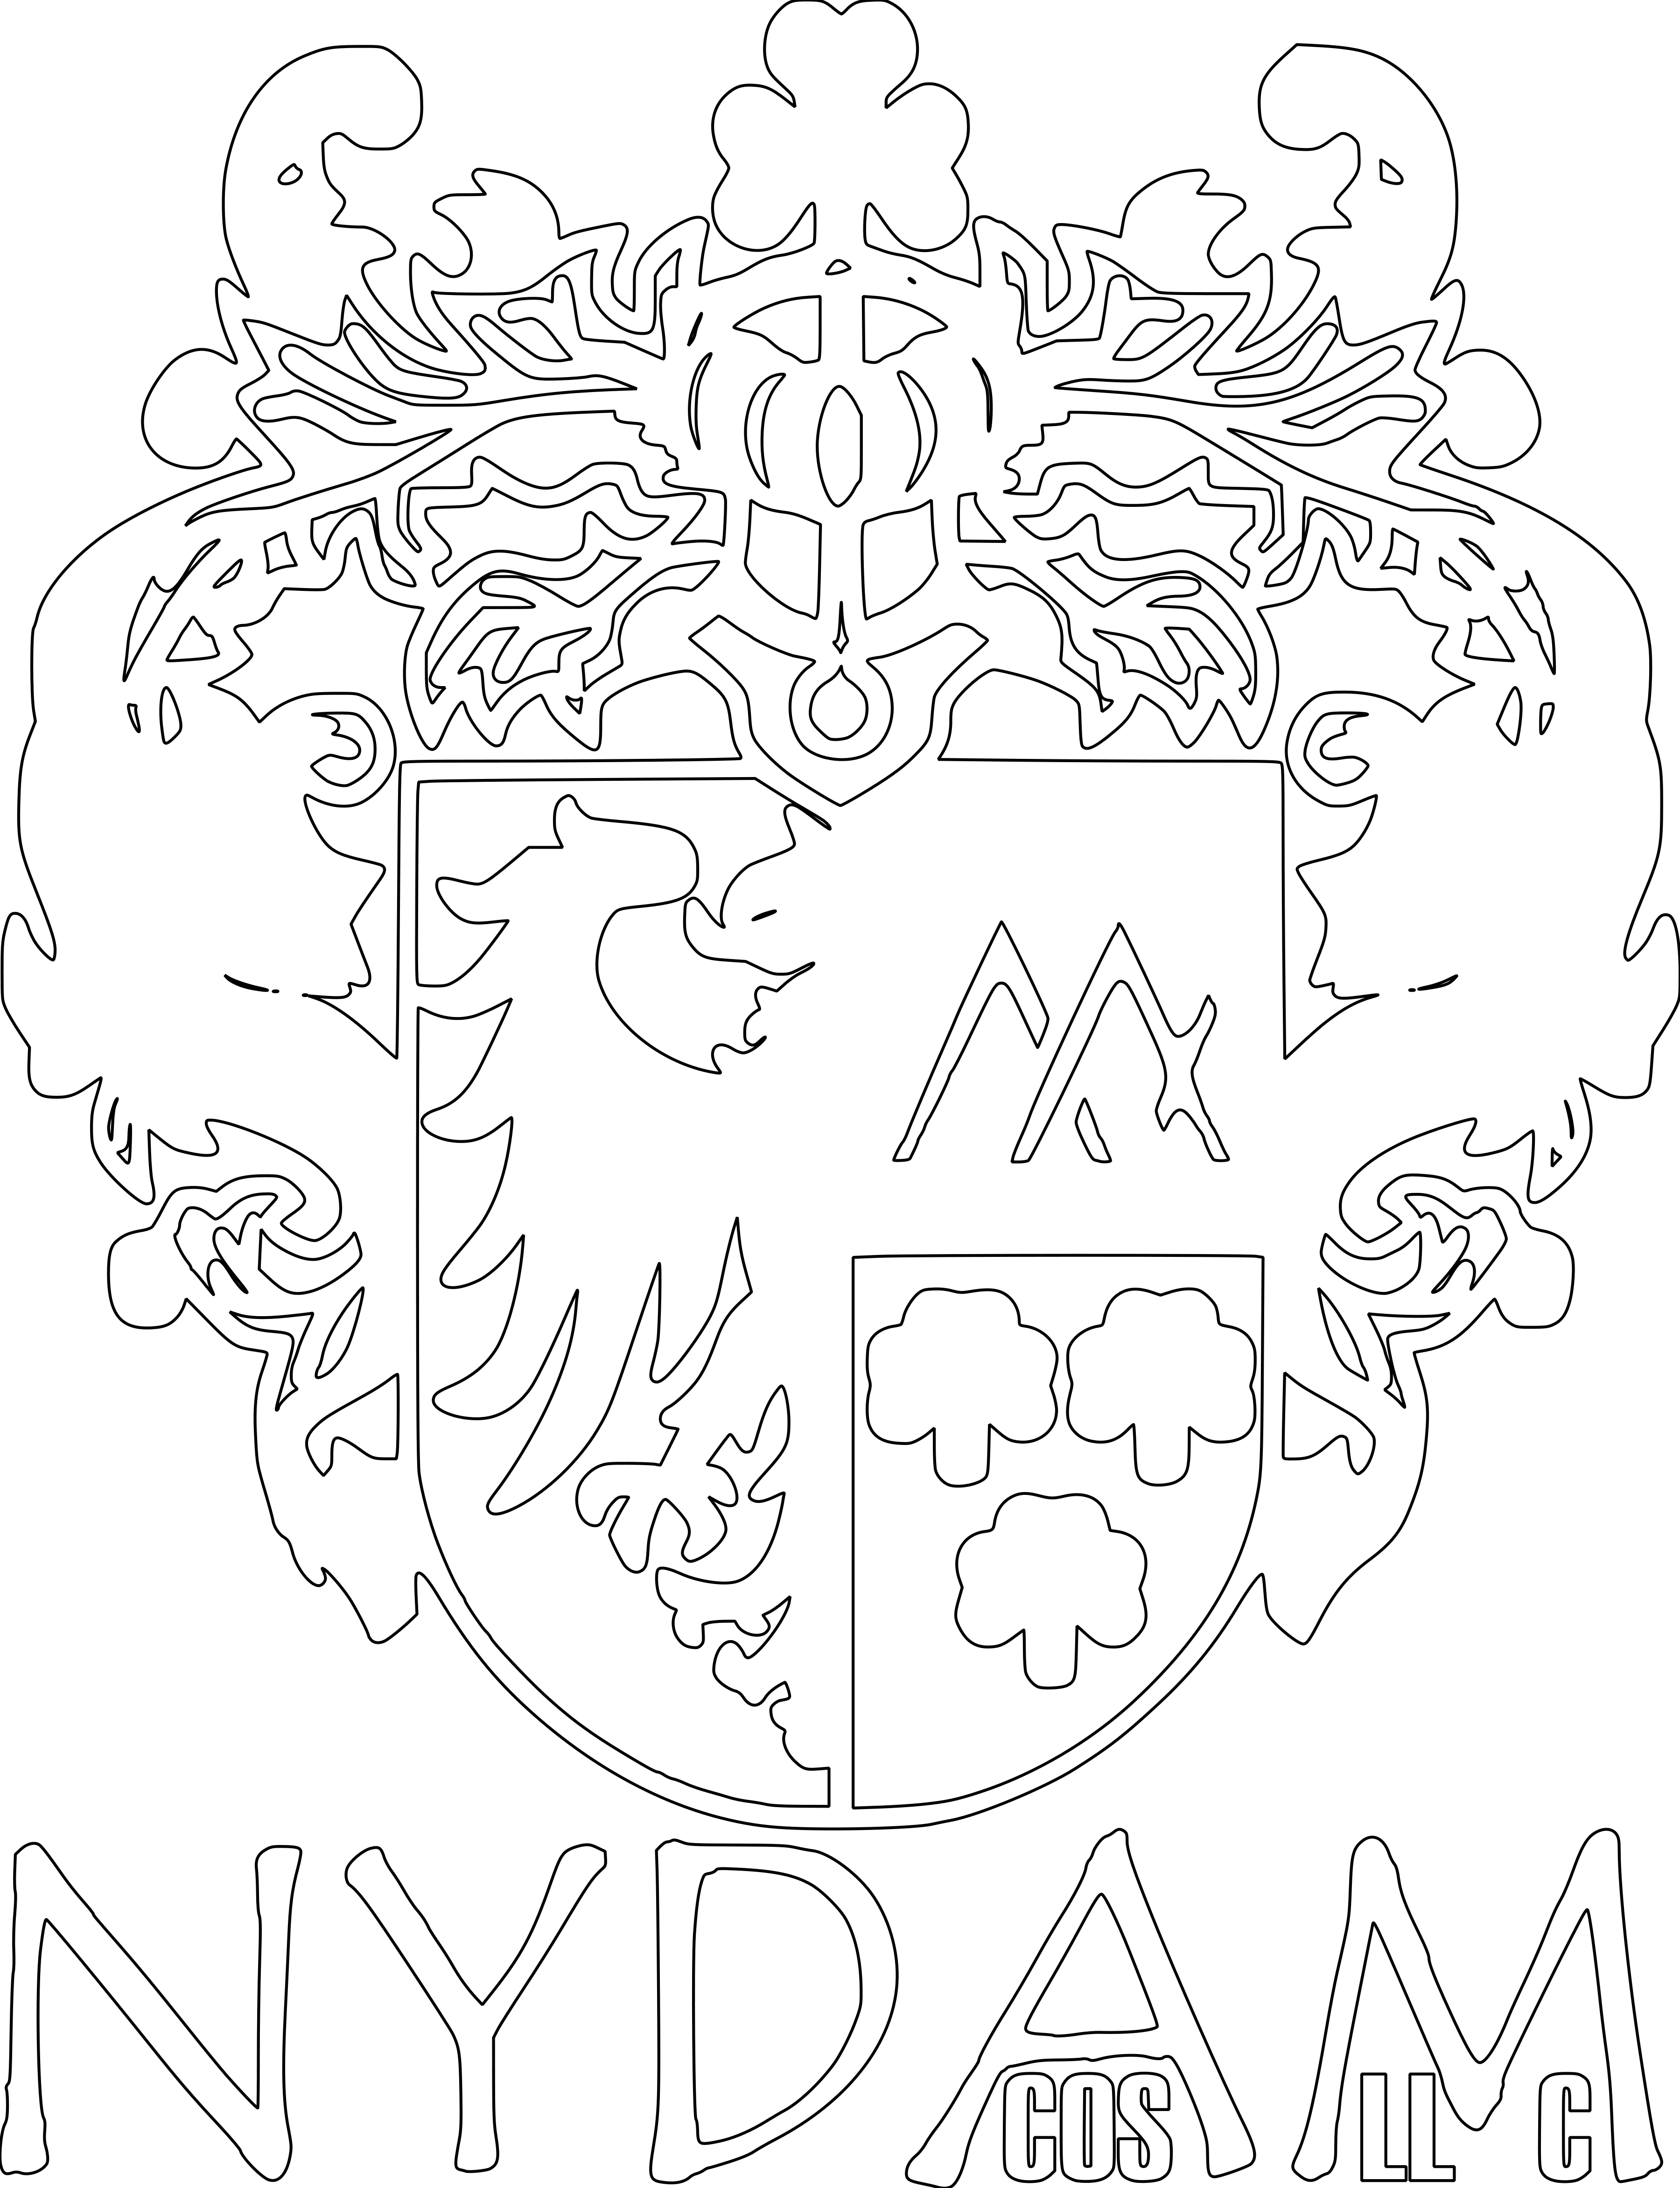 NYDAM Cos LLC